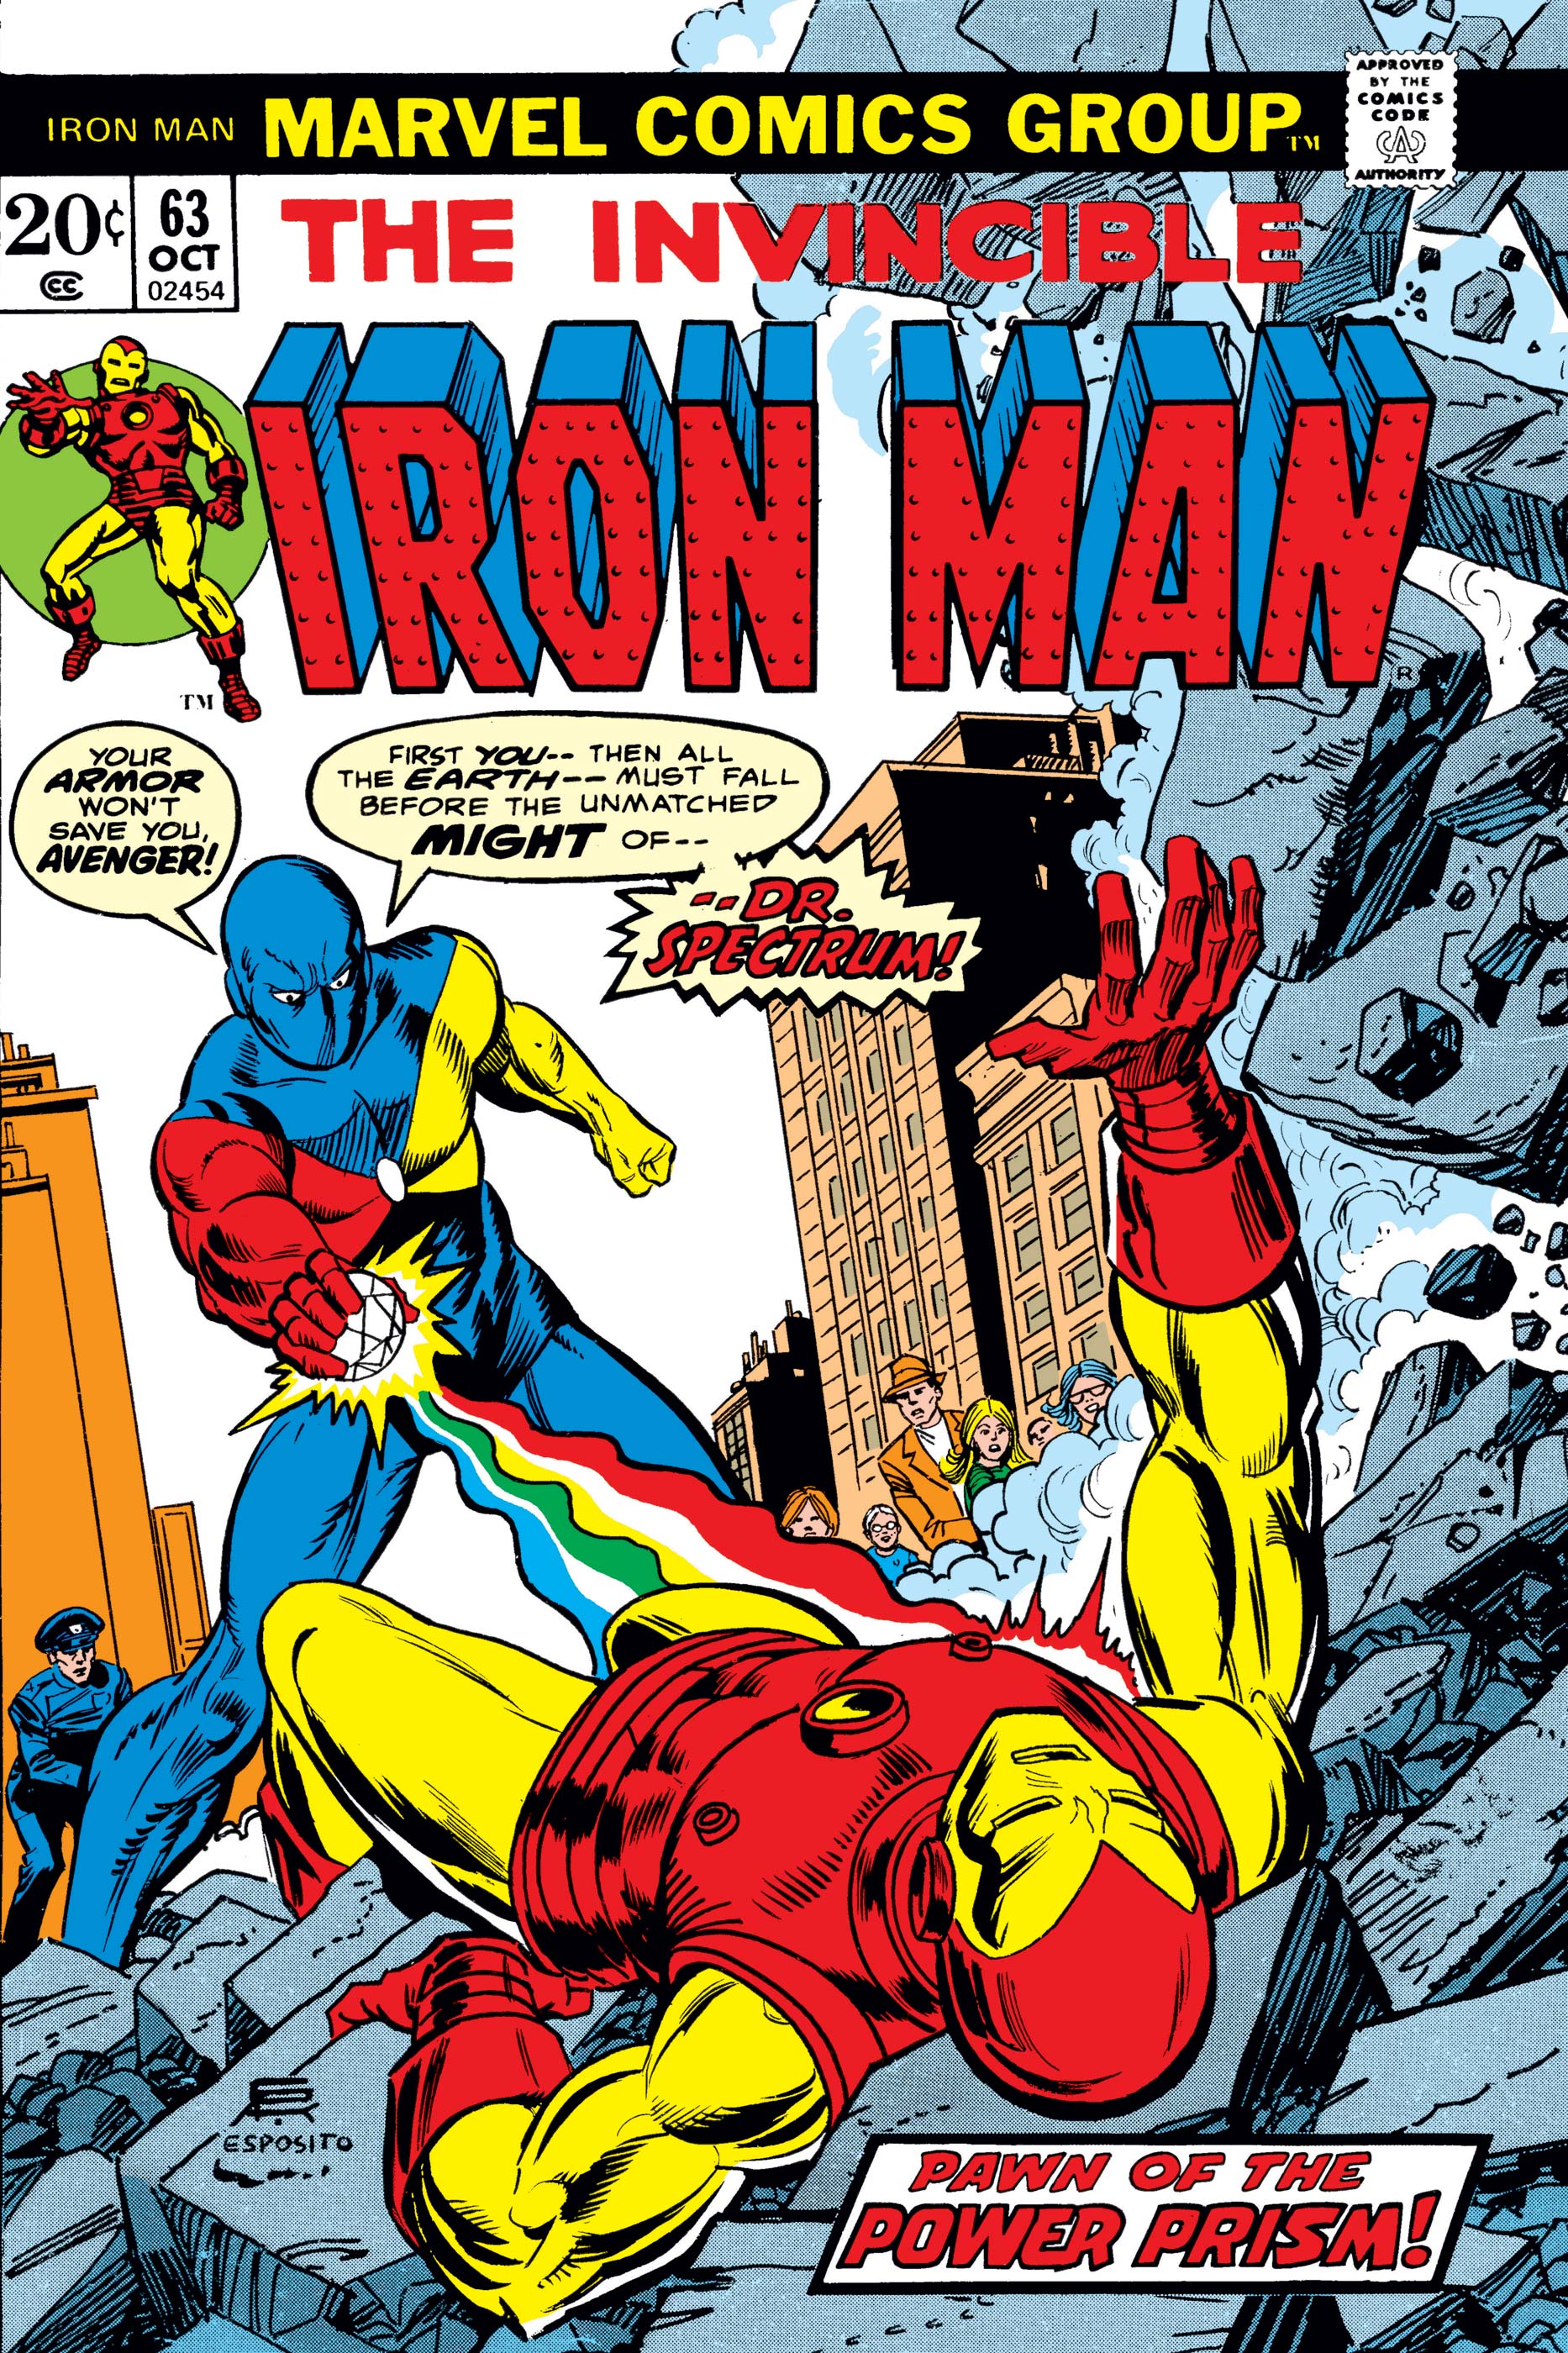 Iron Man (1968) #63 | Comic Issues | Marvel